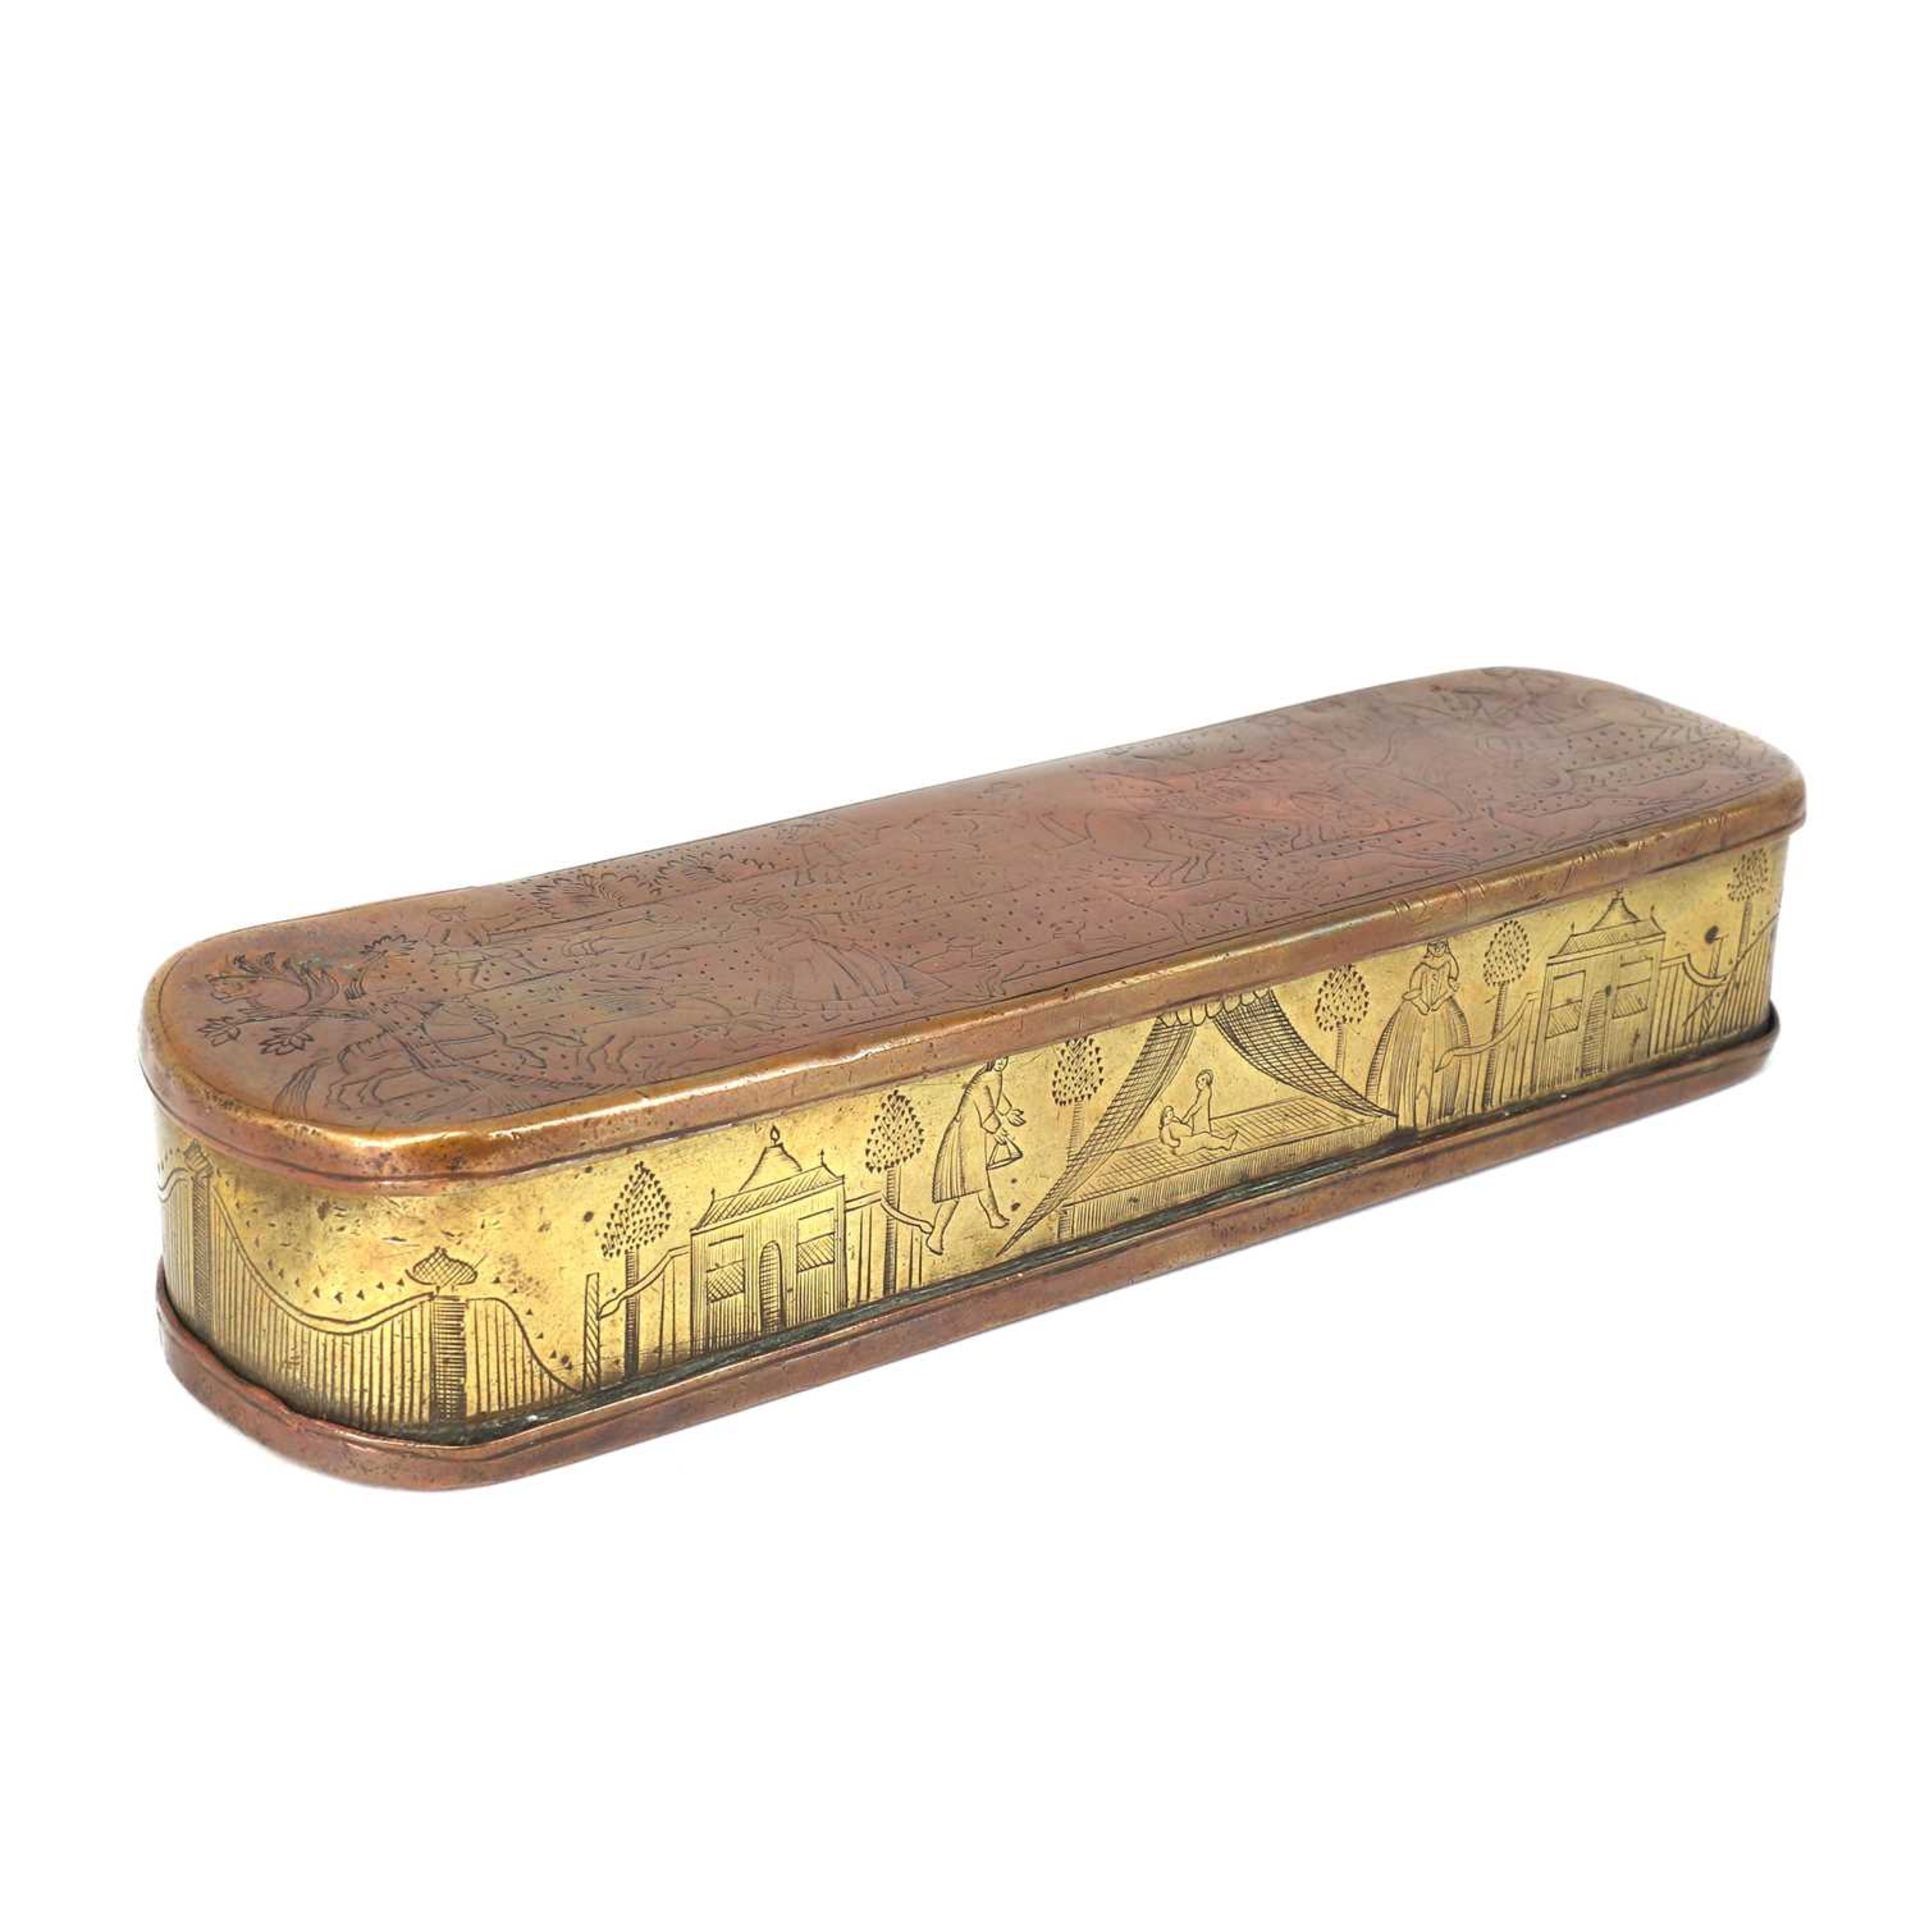 An unusual copper and brass tobacco box,